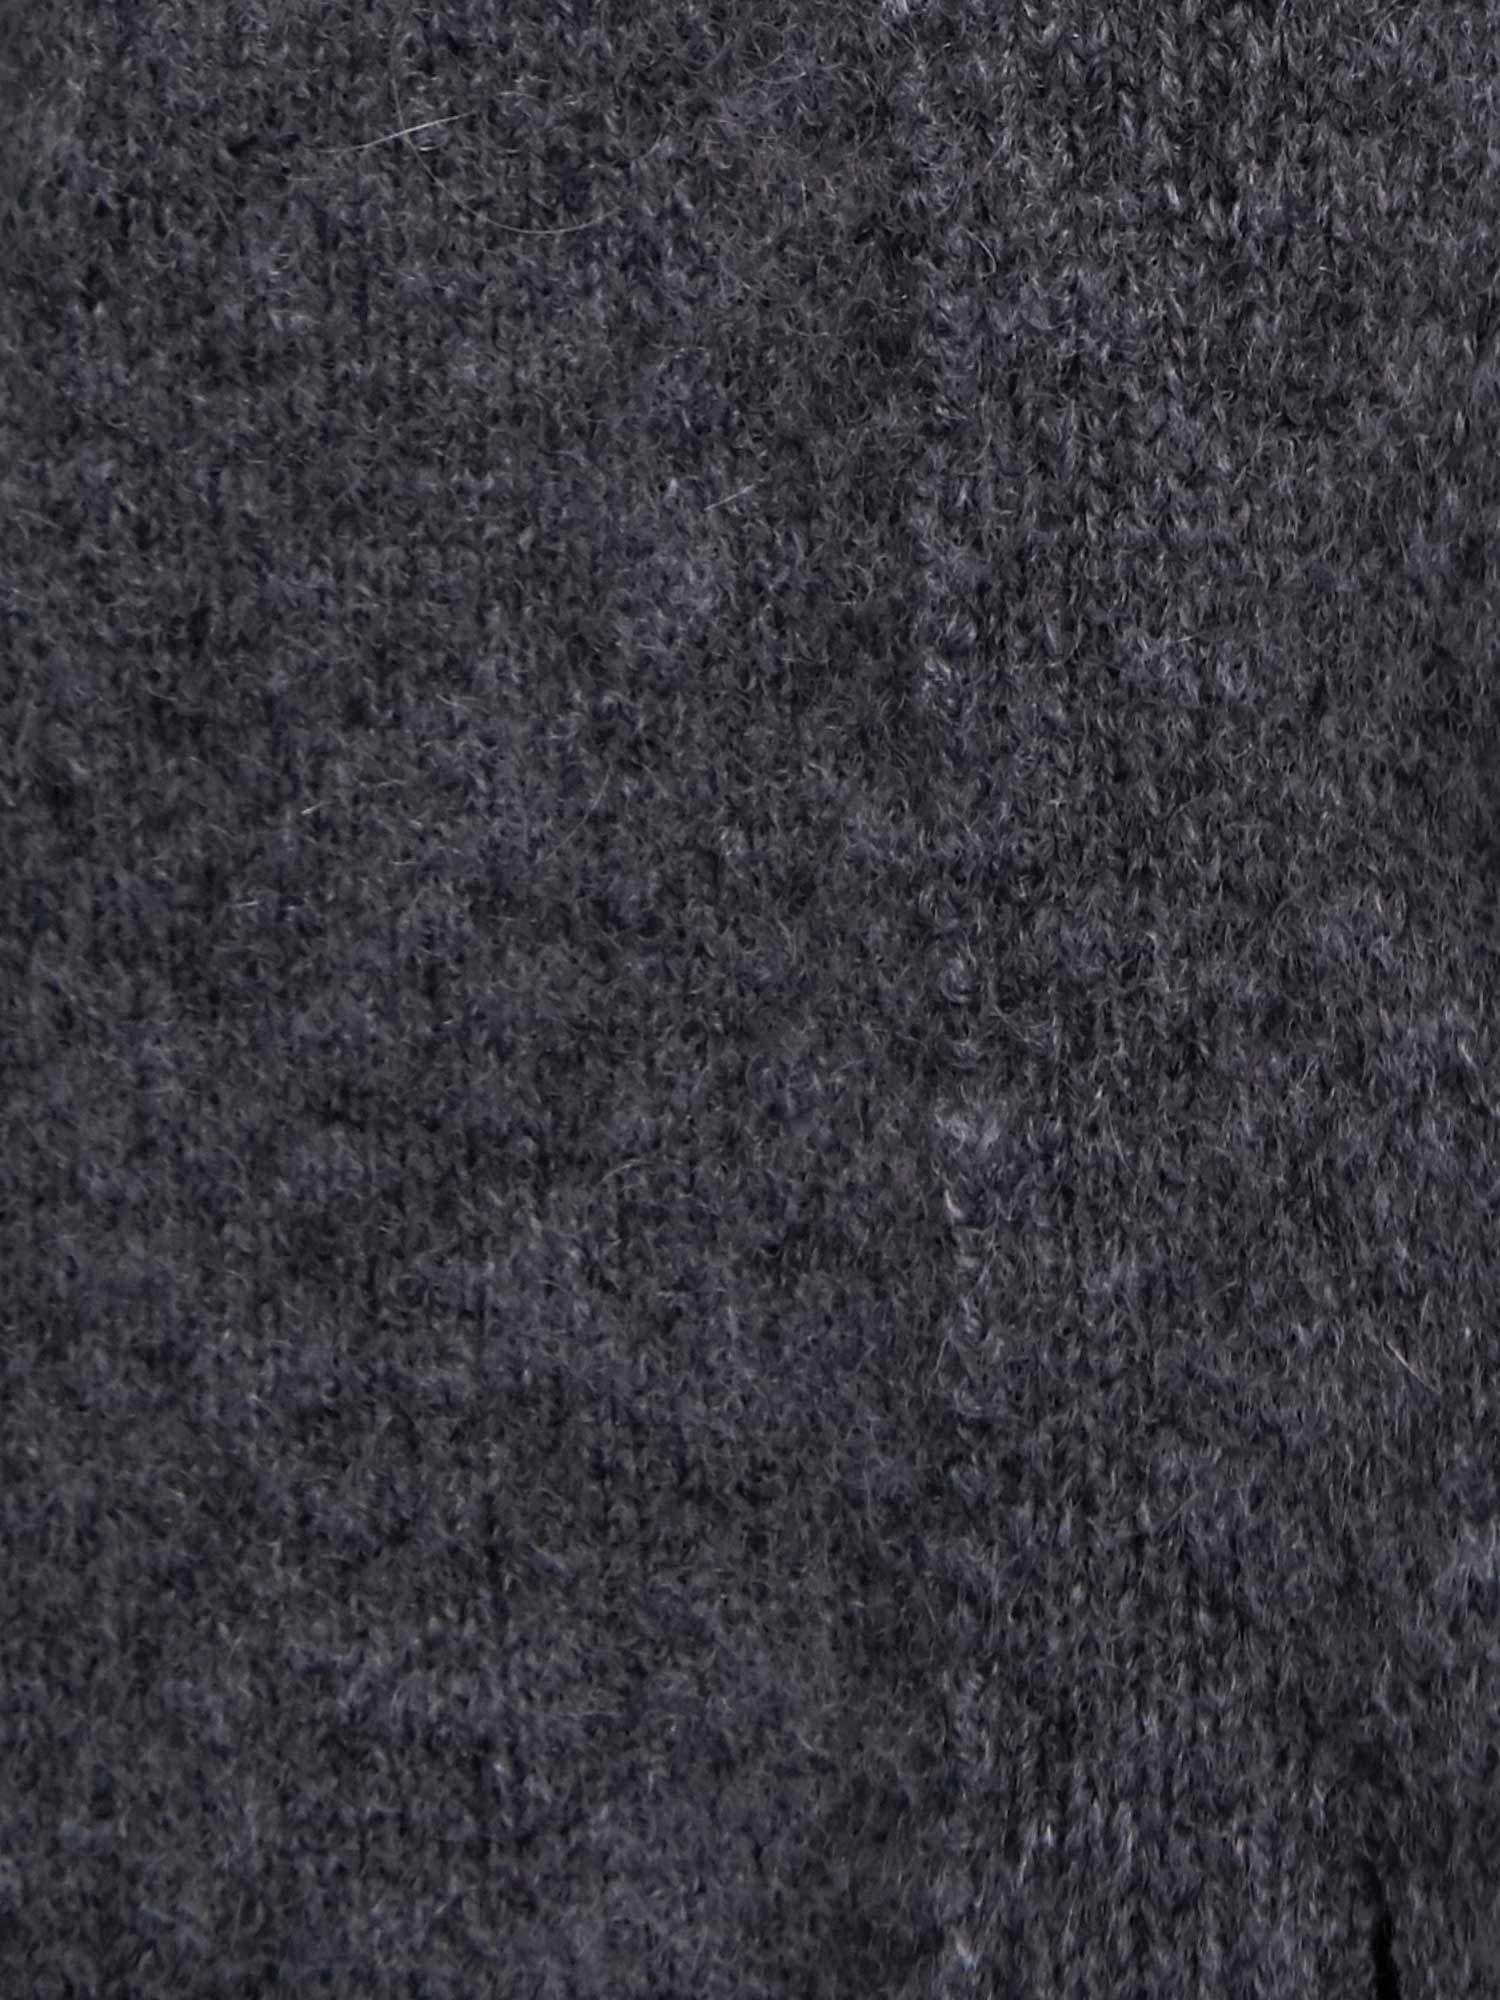 Lace dark grey layered cardigan sweater close up 2